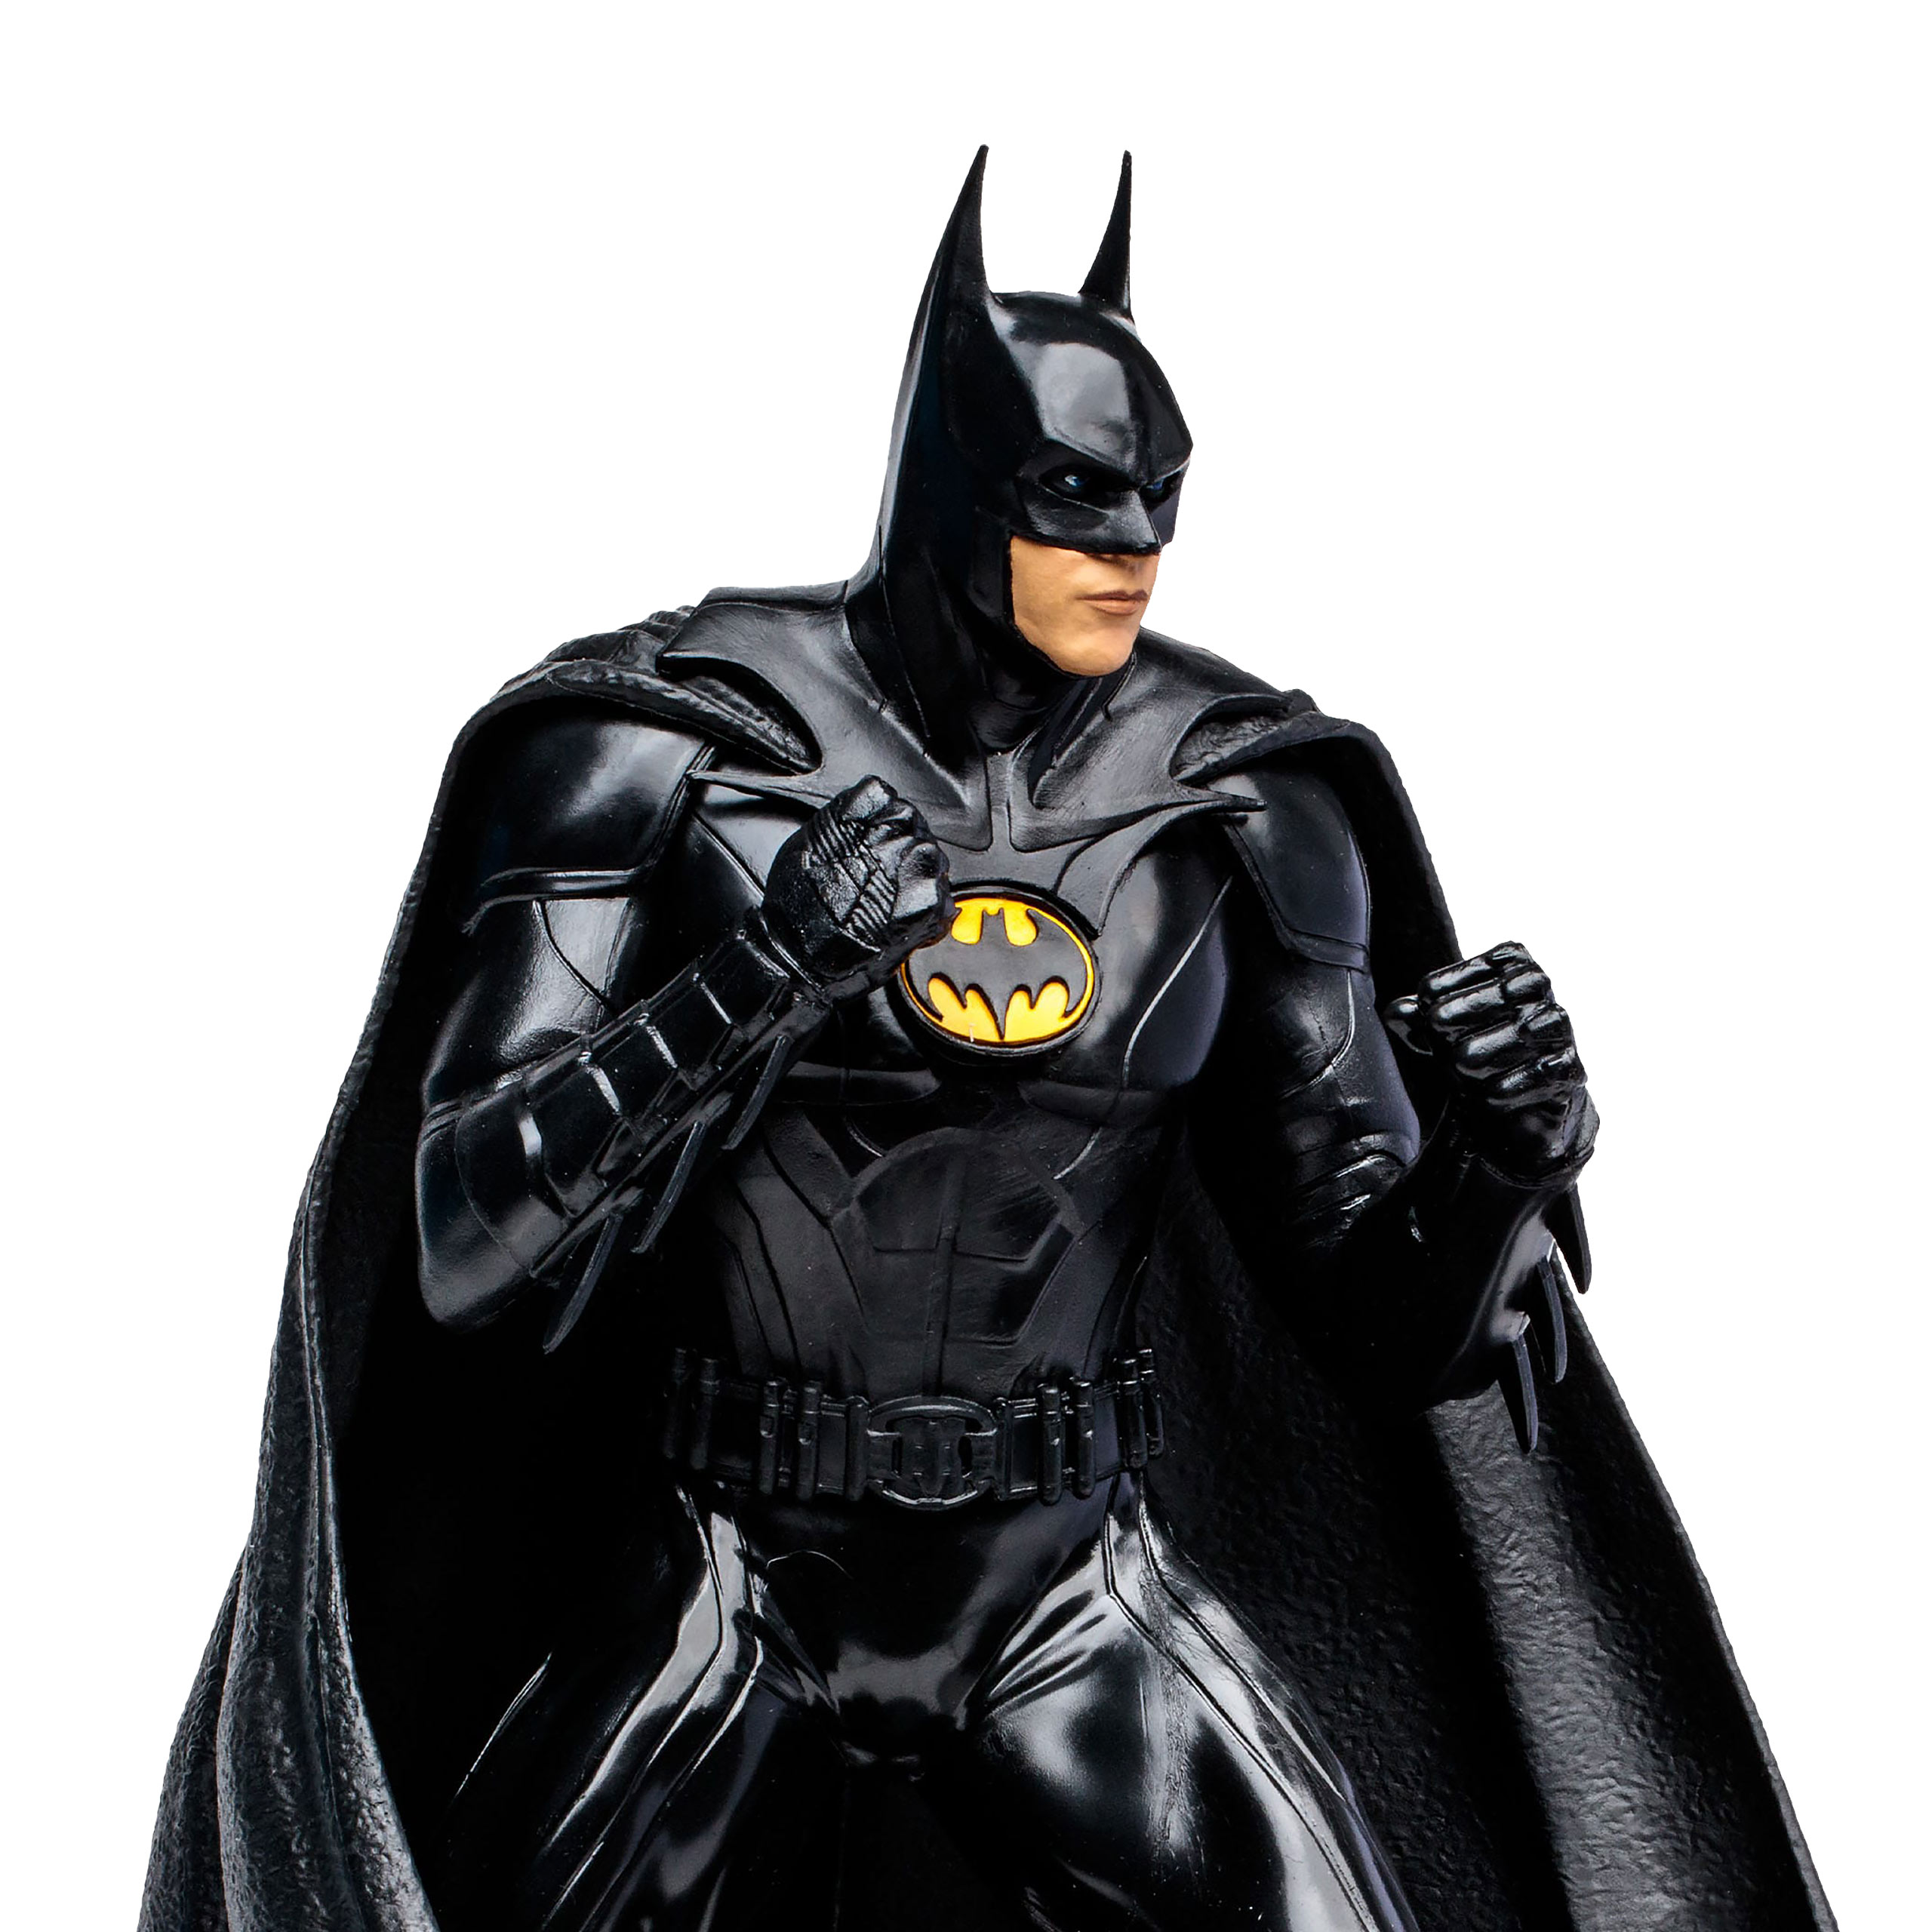 Batman - DC Comics Movie Figure